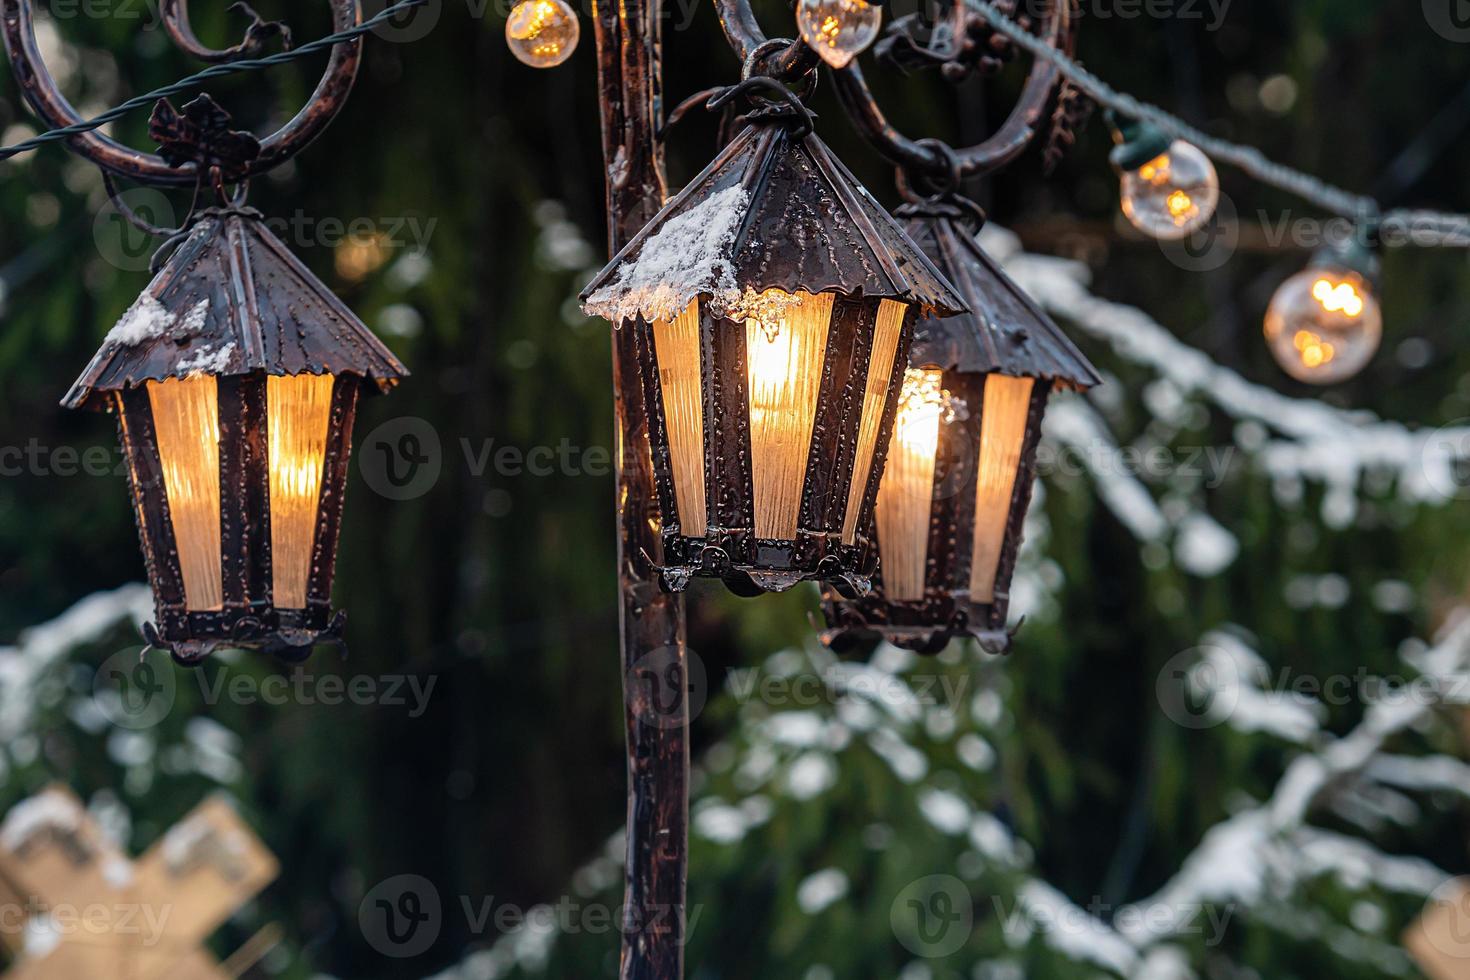 lanternas medievais com ramos de abeto no mercado de Natal. riga, letvia foto